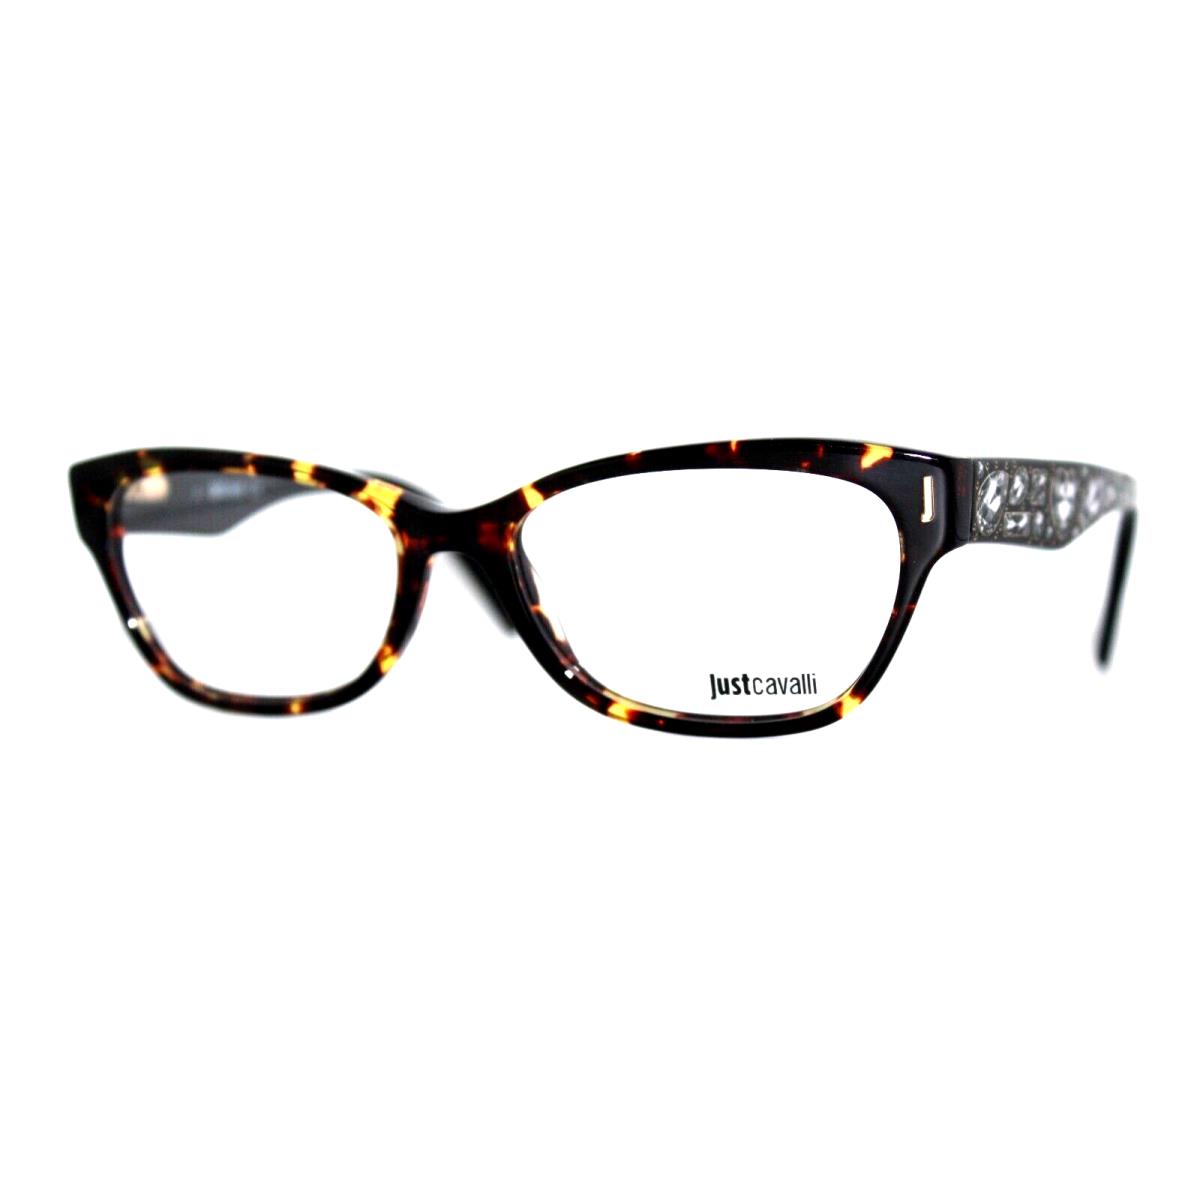 Just Cavalli JC0746 052 Tortoise Eyeglasses Frames 53MM W/case